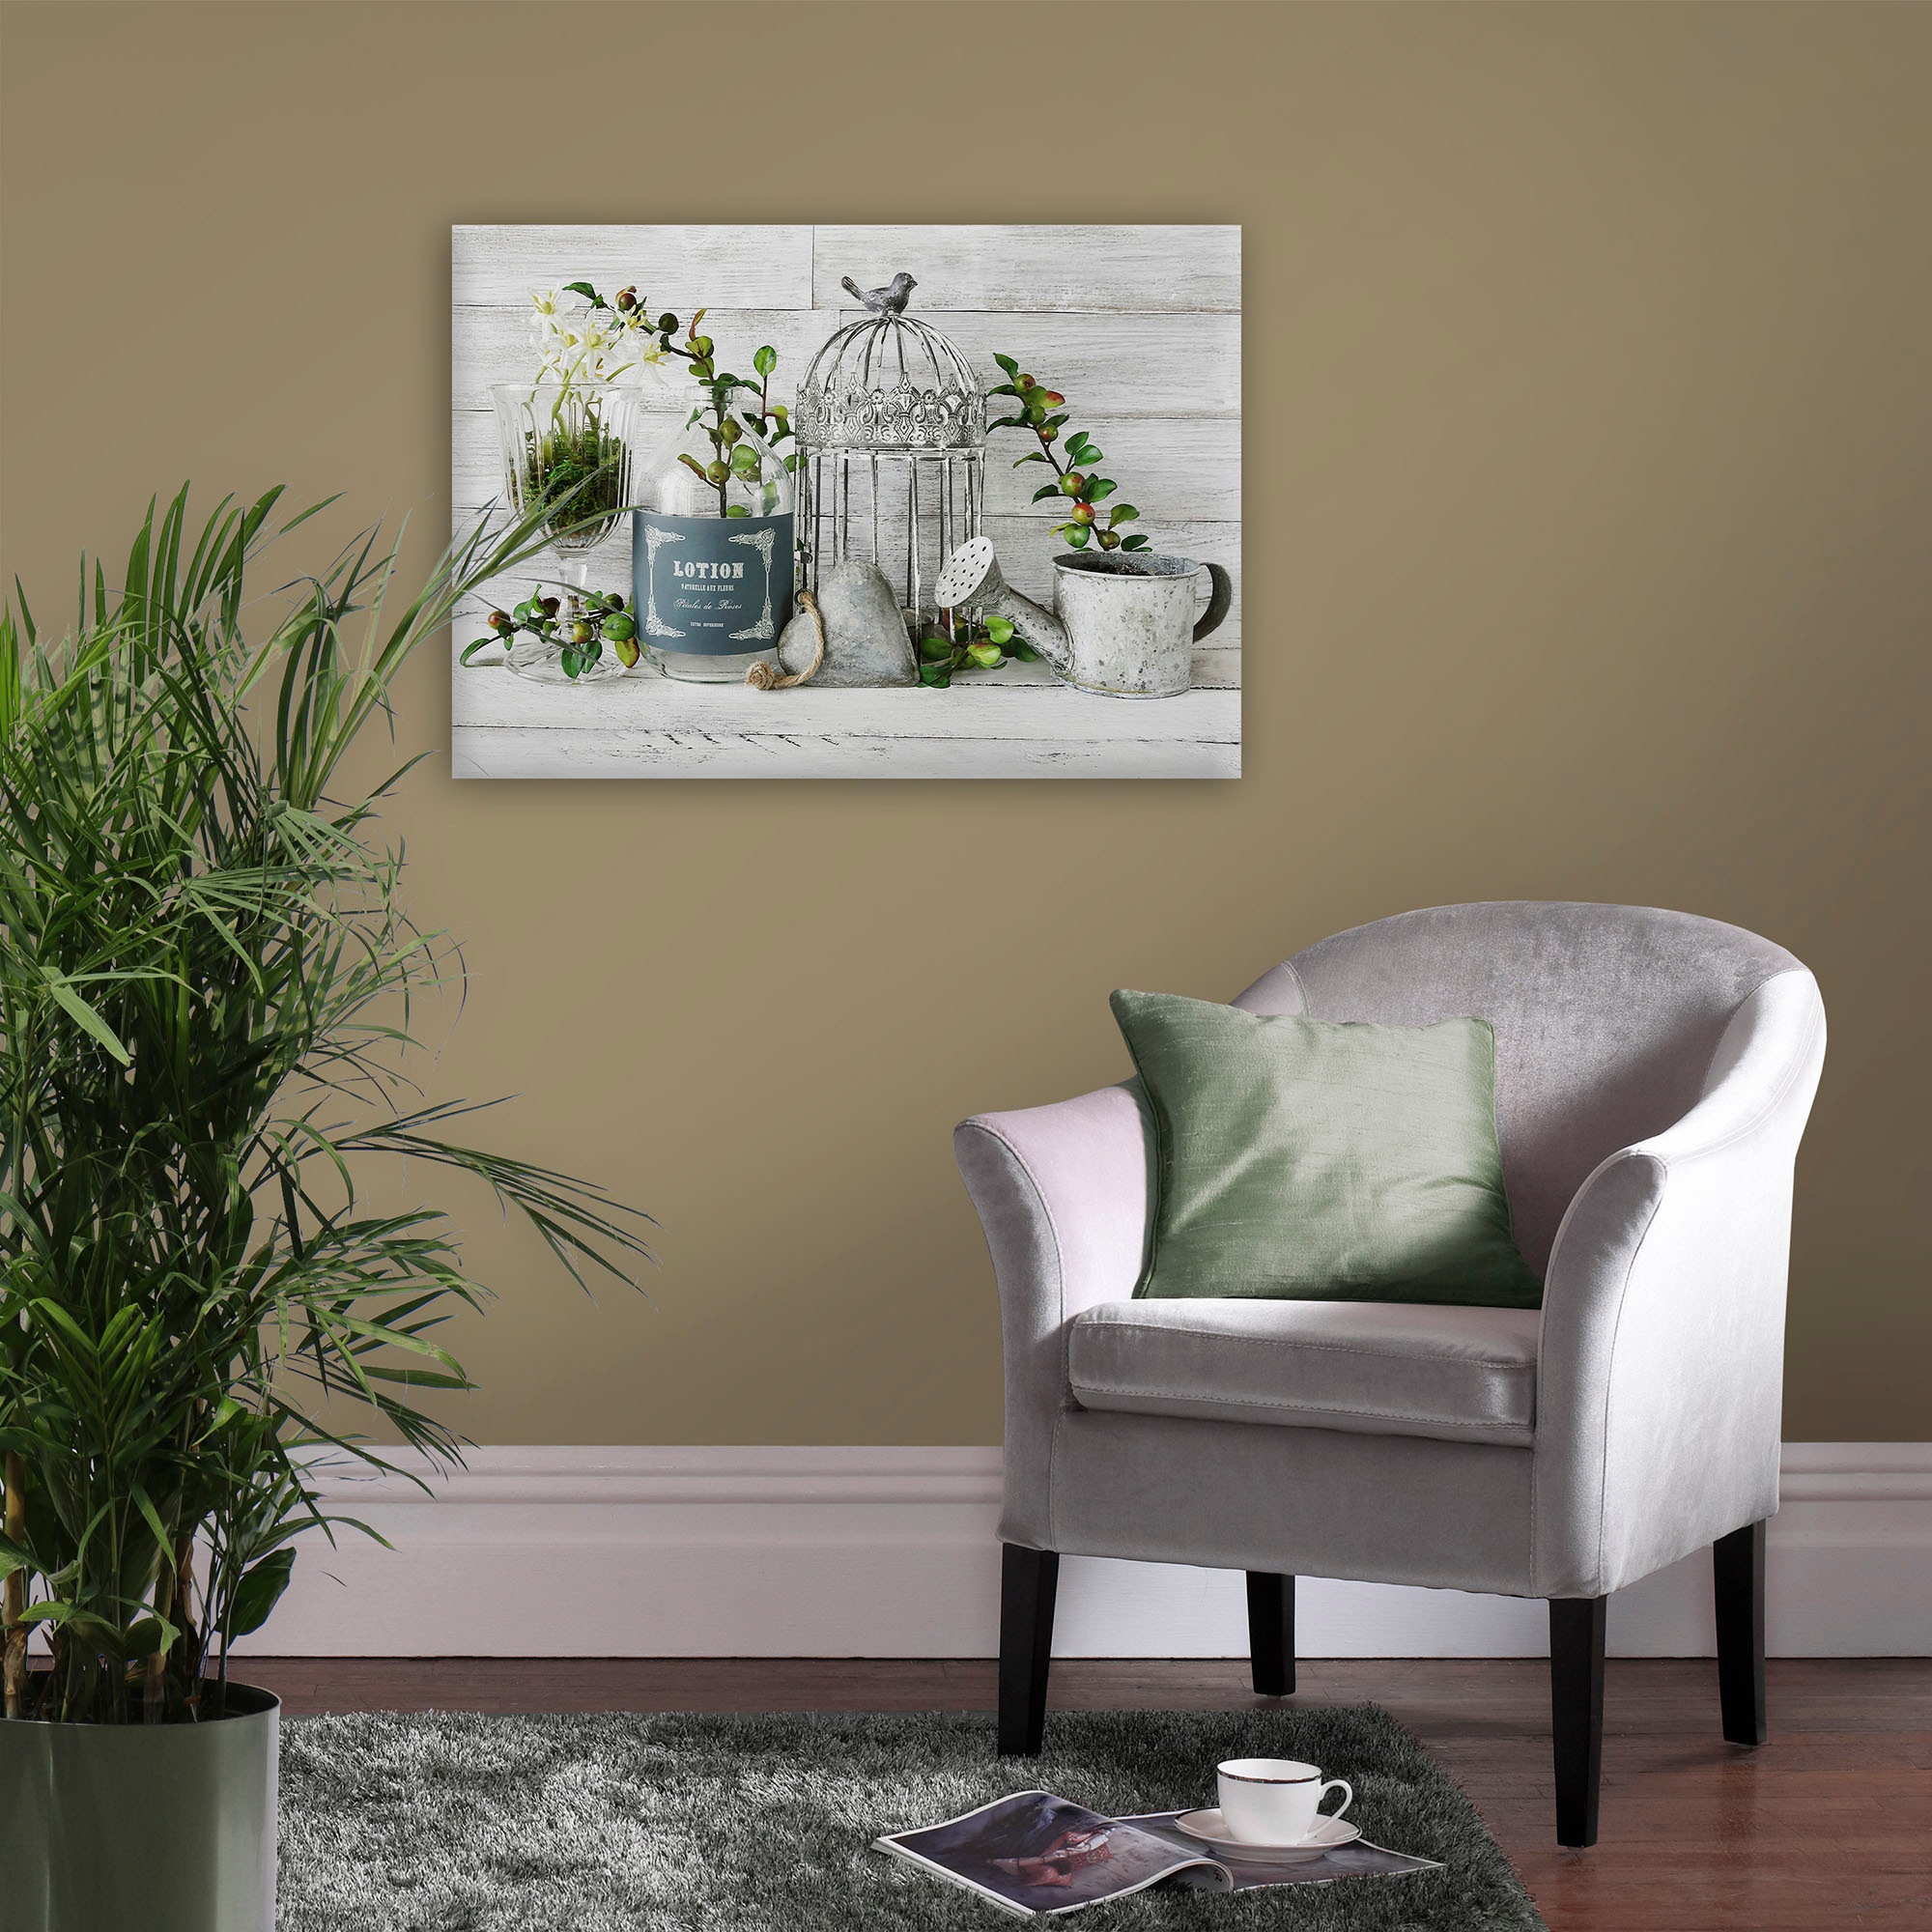 Art for the home Leinwandbild »Lotion 50x70cm«, (1 St.) auf Rechnung kaufen | Leinwandbilder